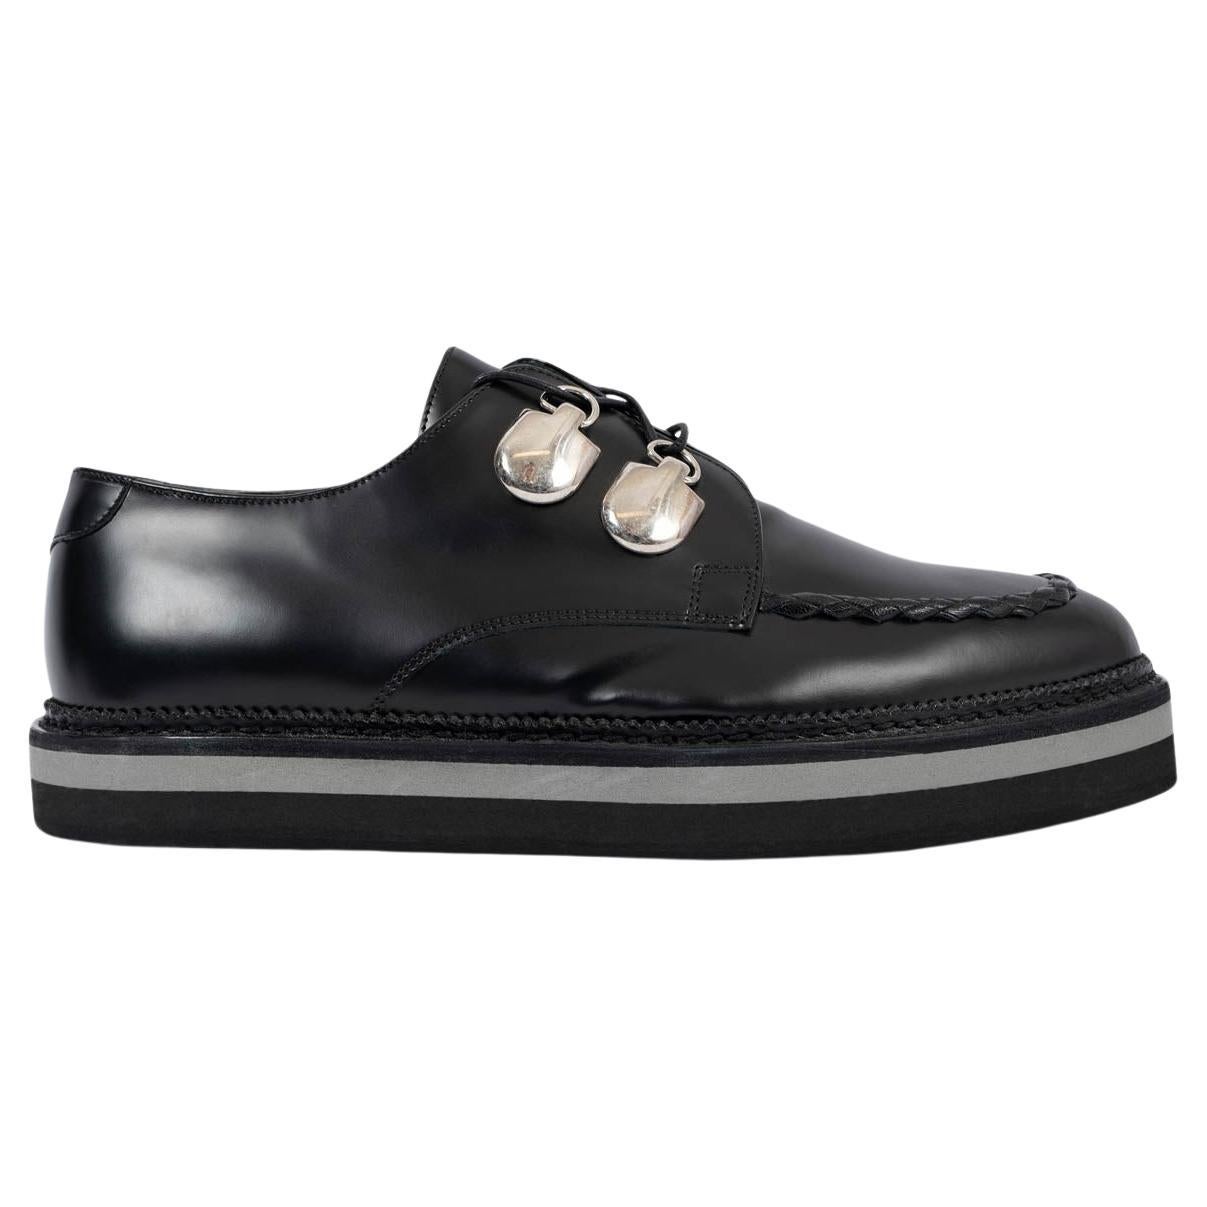 ALEXANDER MCQUEEN black leather LACE-UP PLATFORM Flats Shoes 39 For Sale